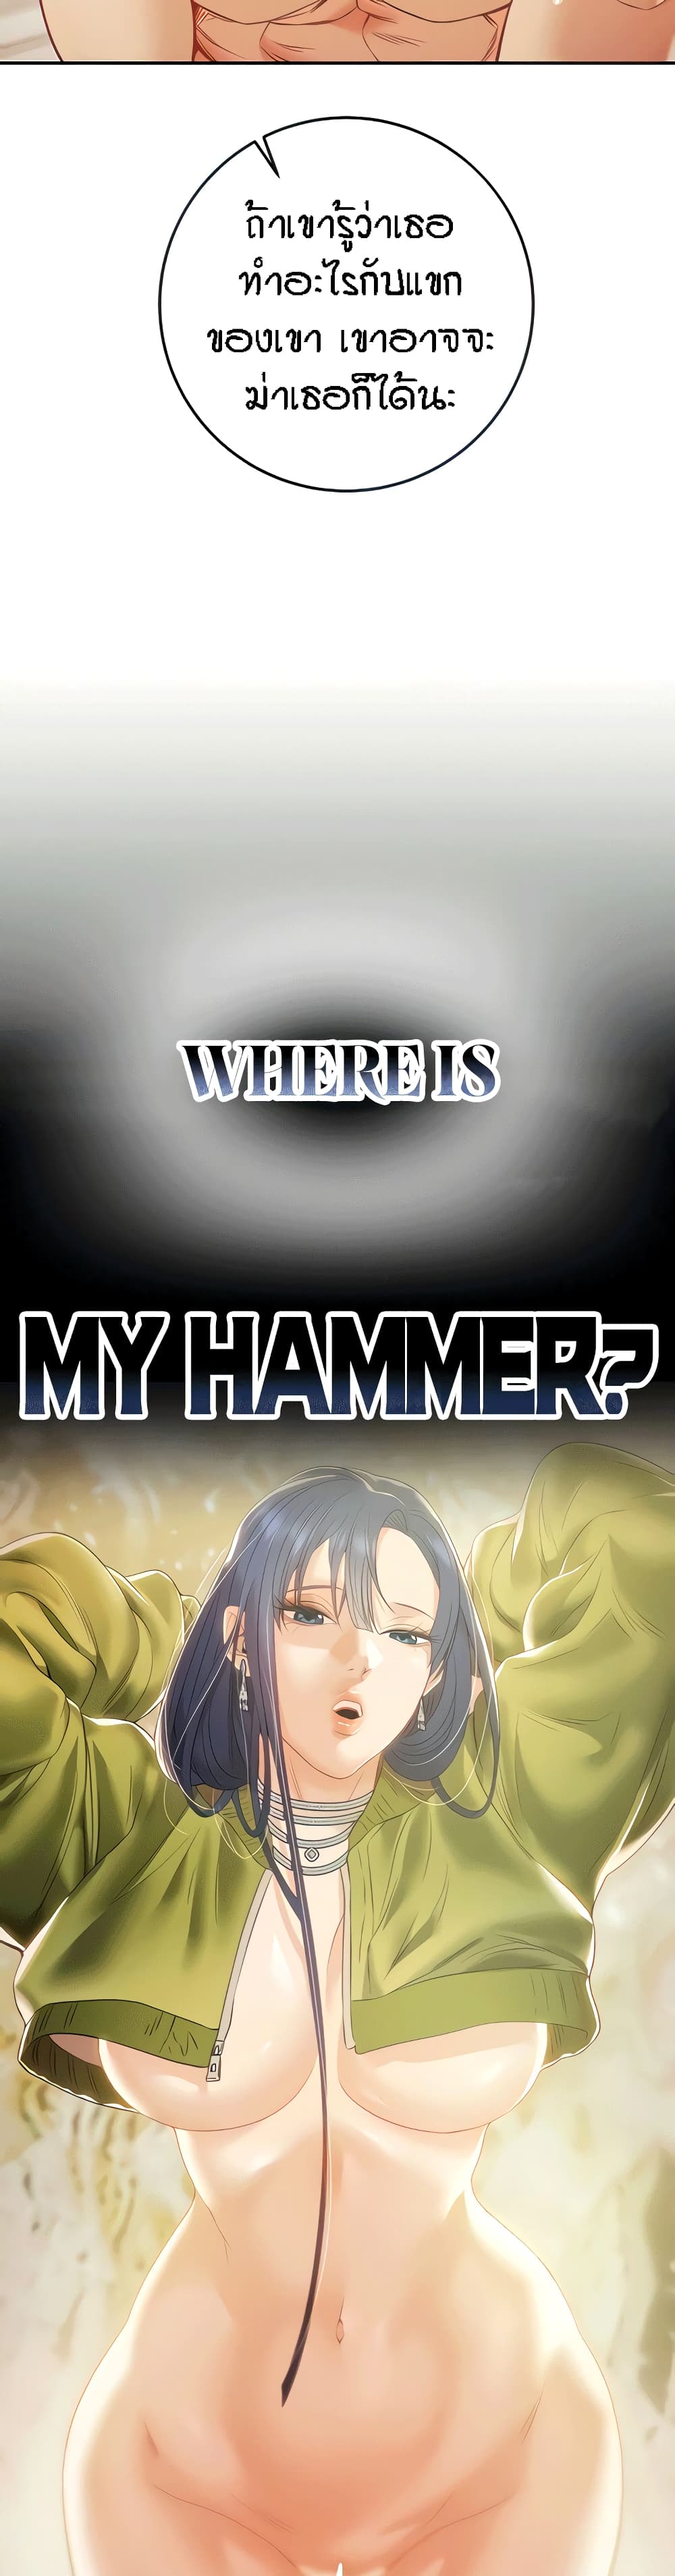 Where Did My Hammer Go 18 (7)